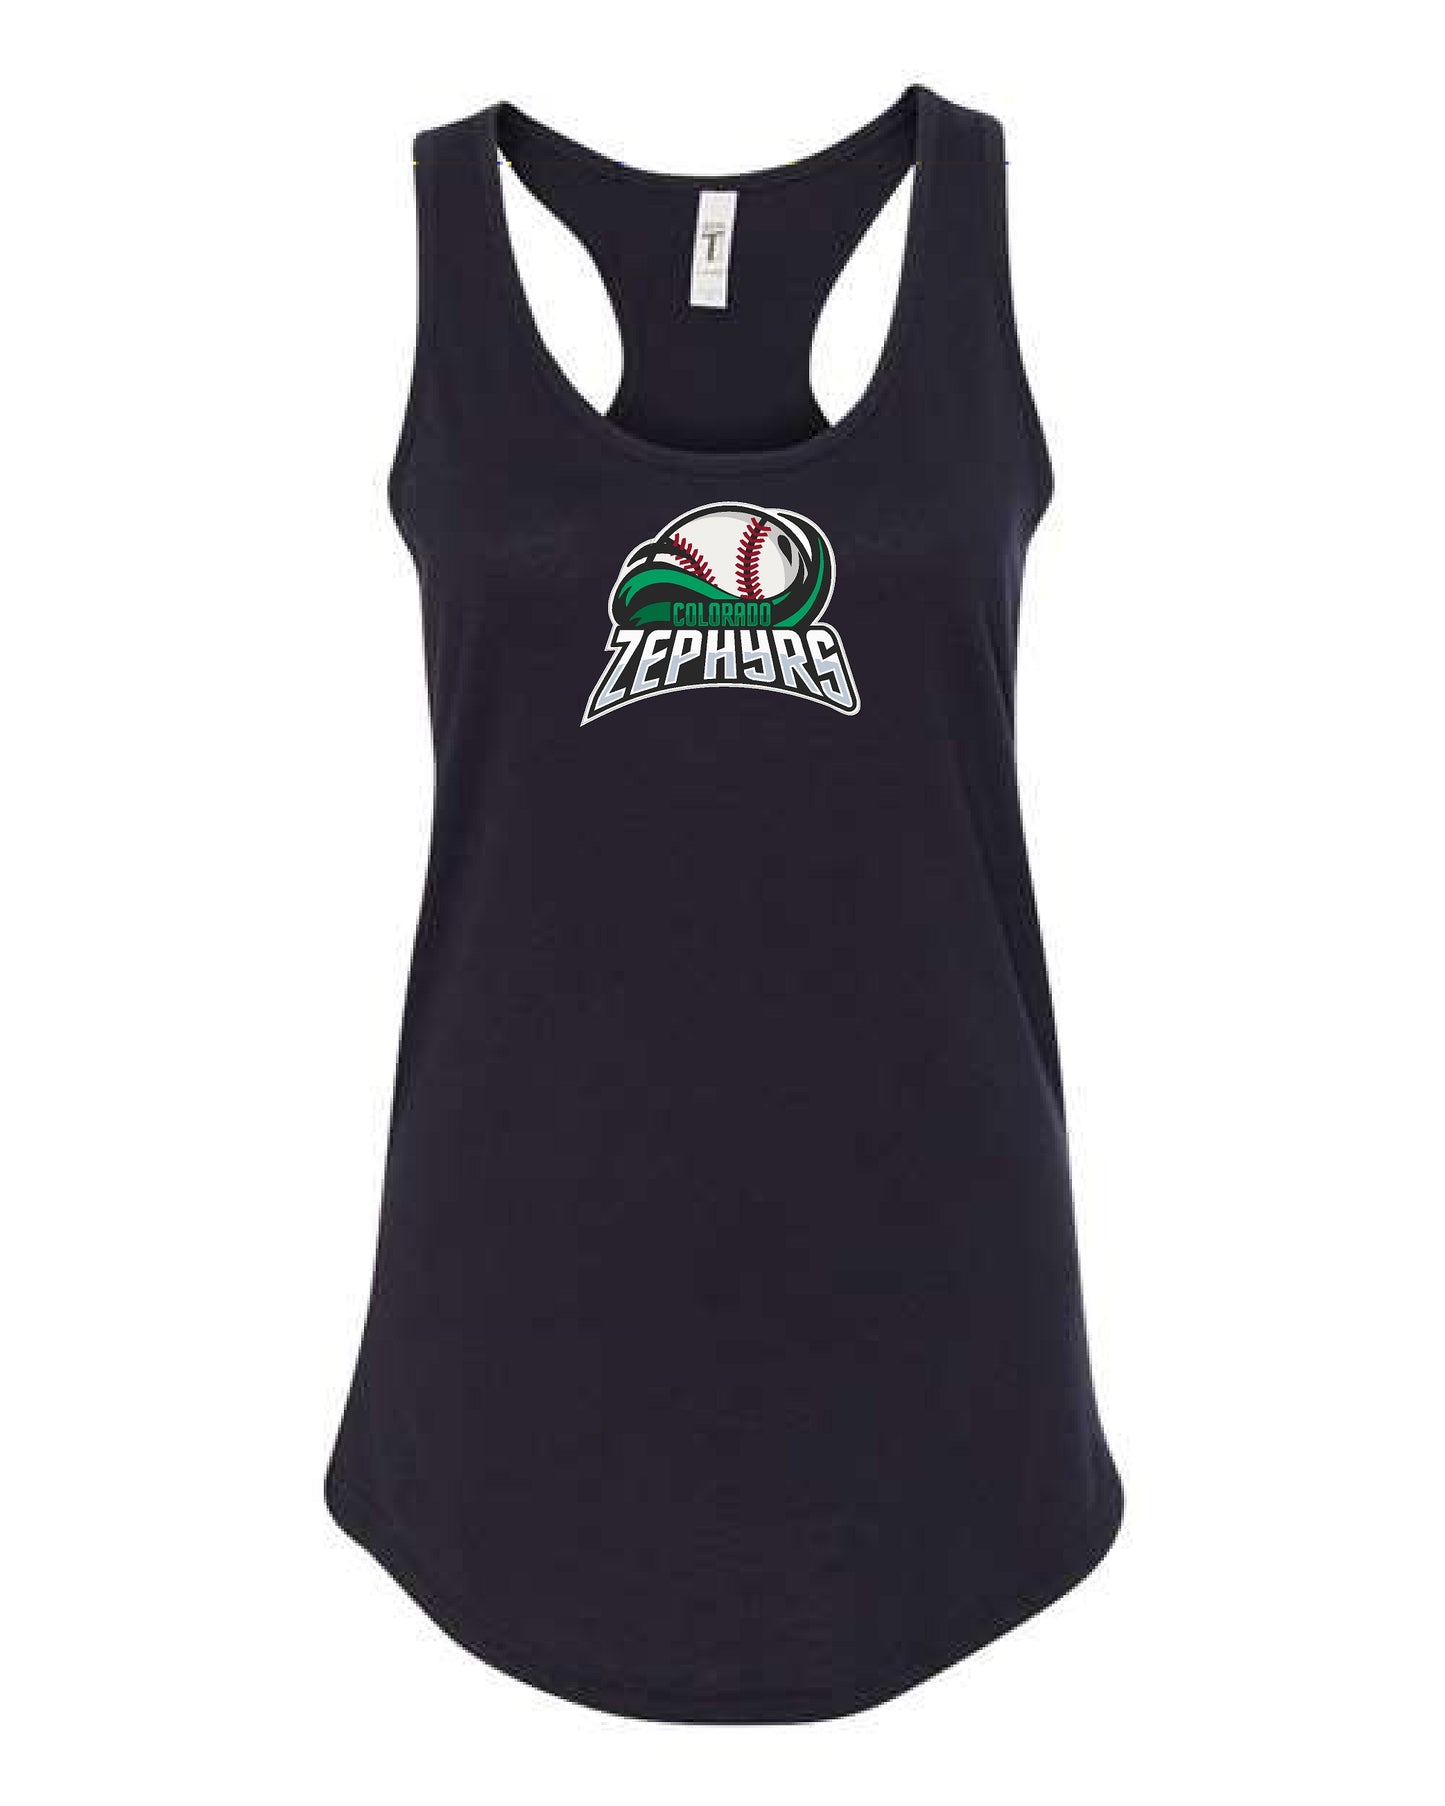 ZEPHYRS - Next Level Women's Racerback Tank Black